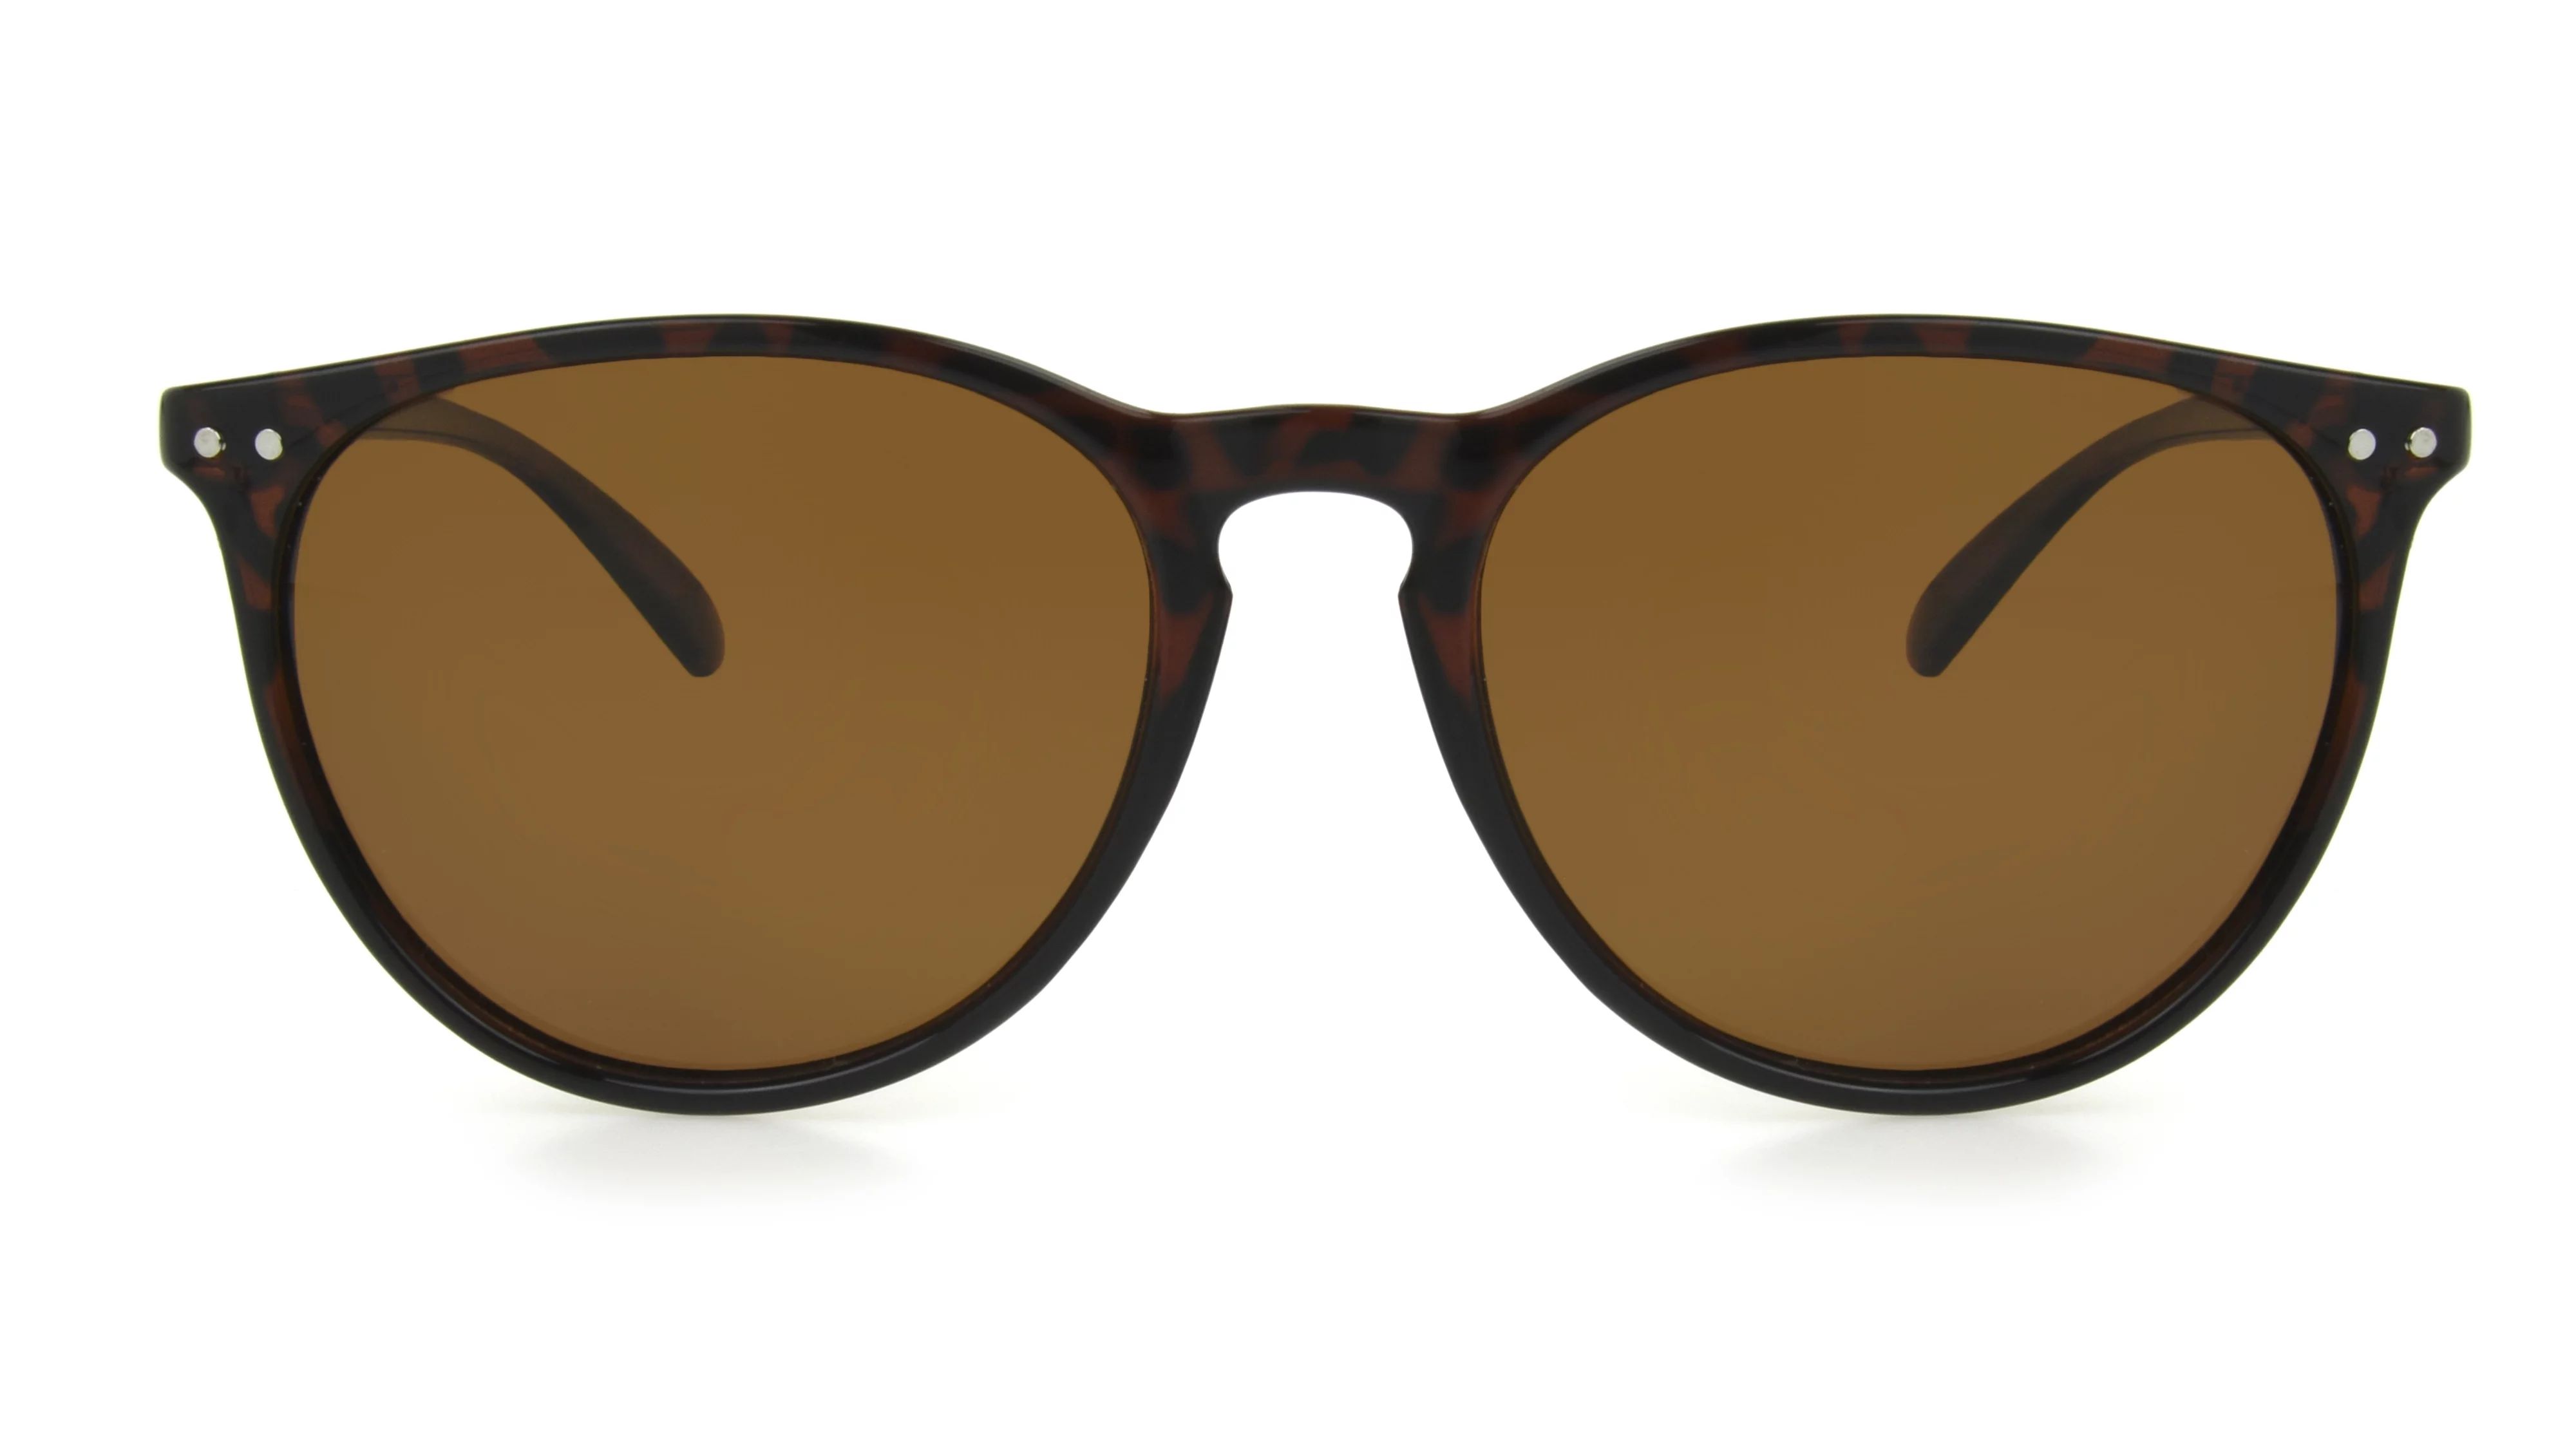 Sunsentials By Foster Grant Women's Cat Eye Sunglasses, Tortoise Brown | Walmart (US)